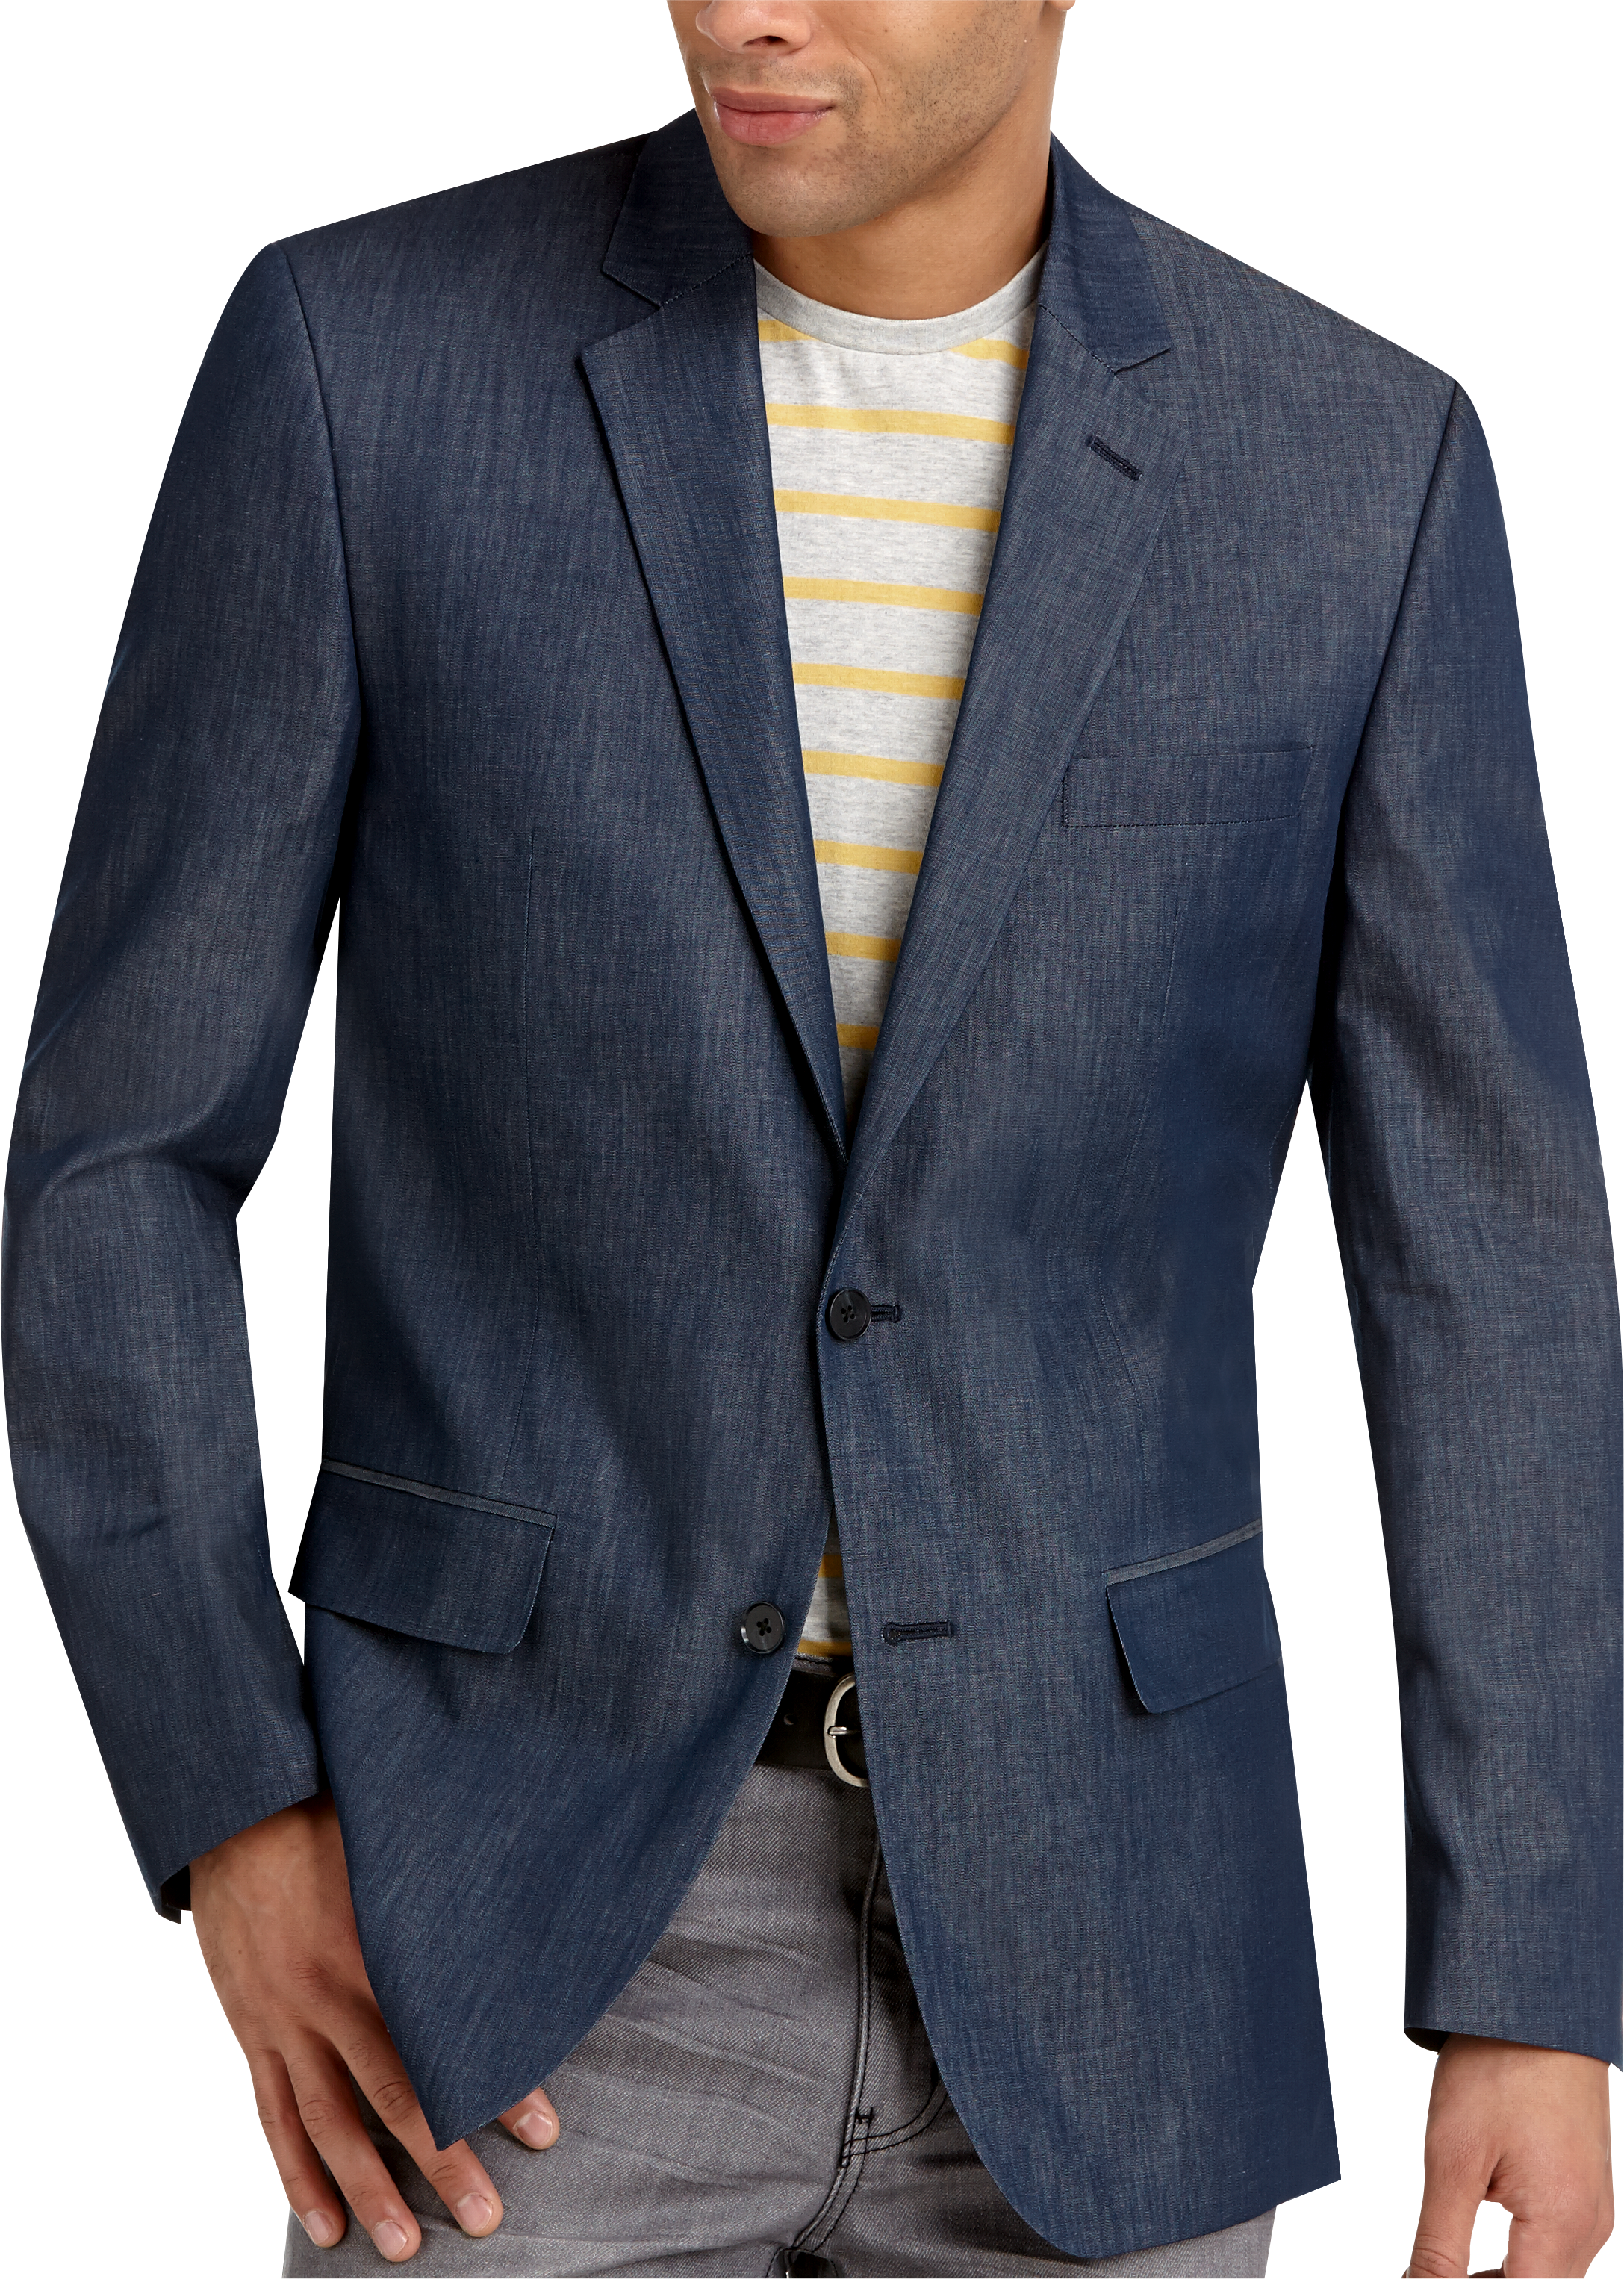 Sport Coats & Blazers - Suits & Clothing | Men's Wearhouse